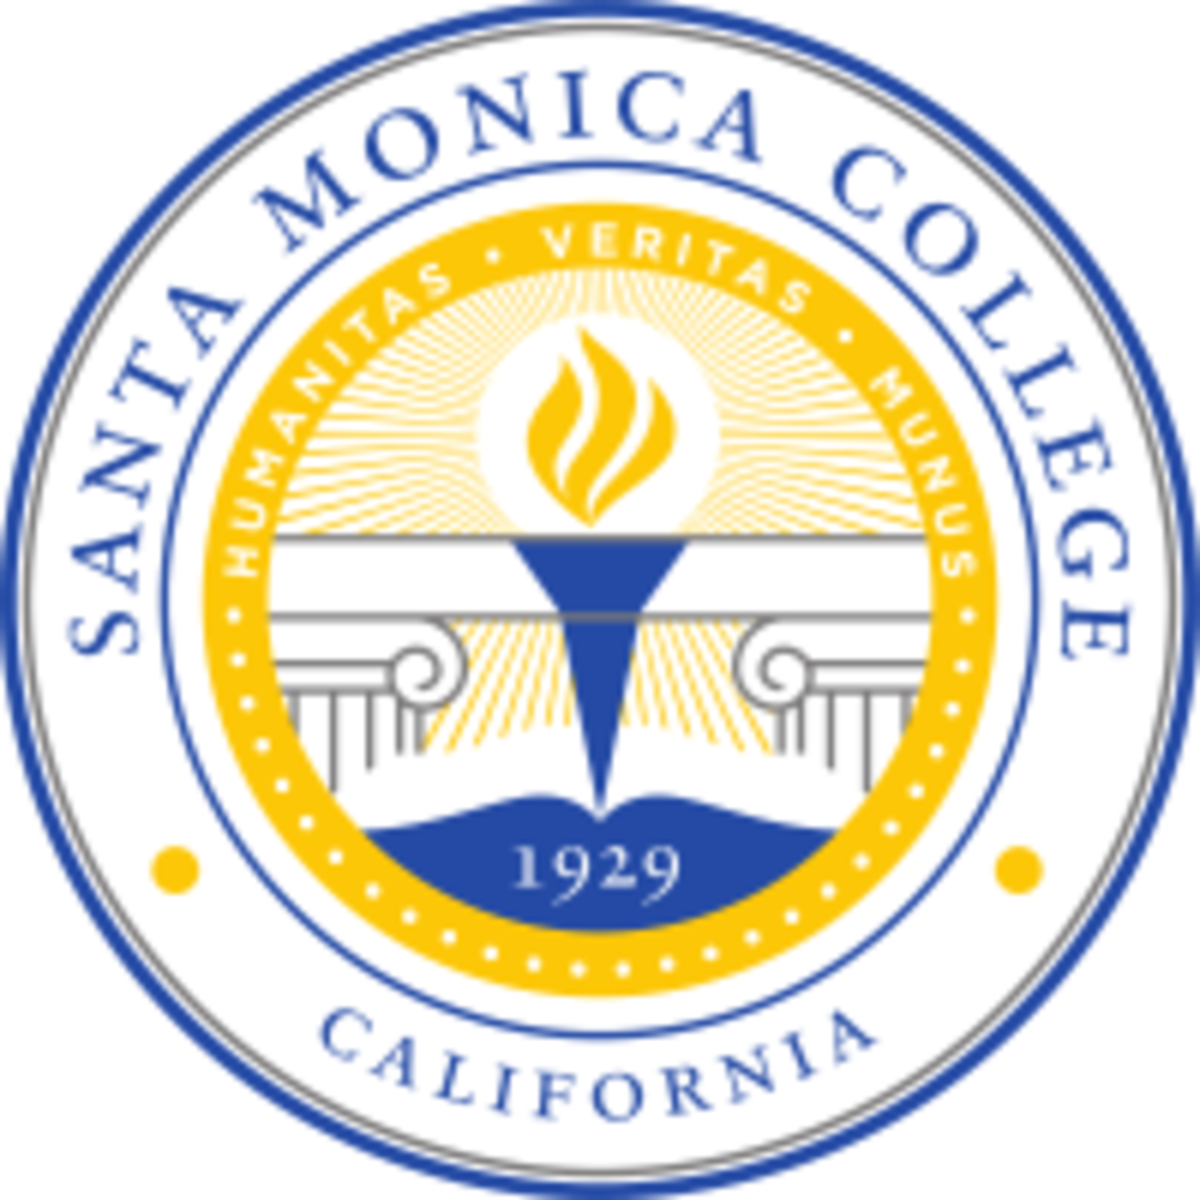 mathboard santa monica college